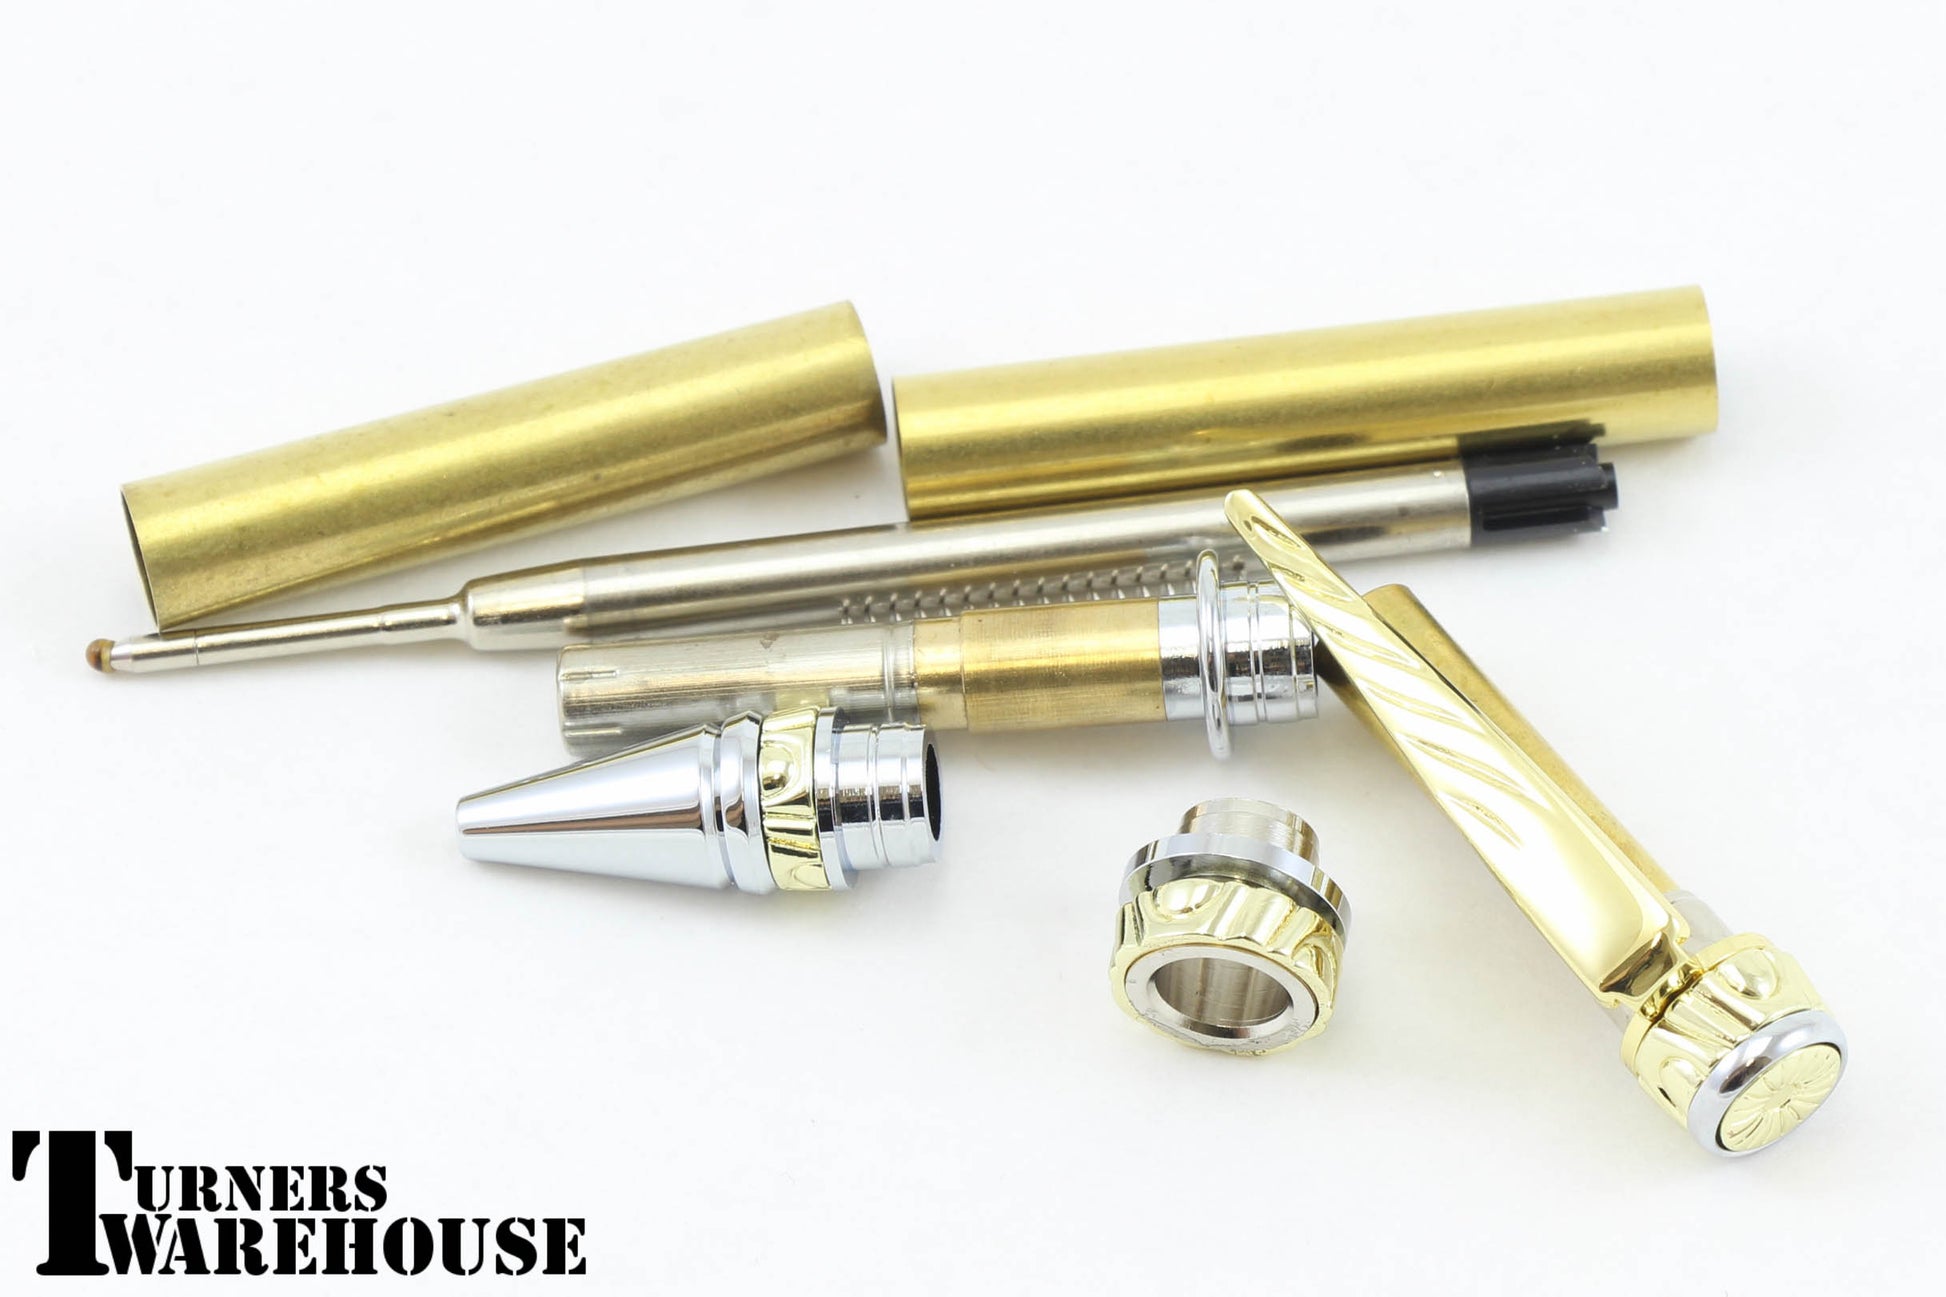 Cigar Pen Kits 10-Pack with Bushings (Gold)